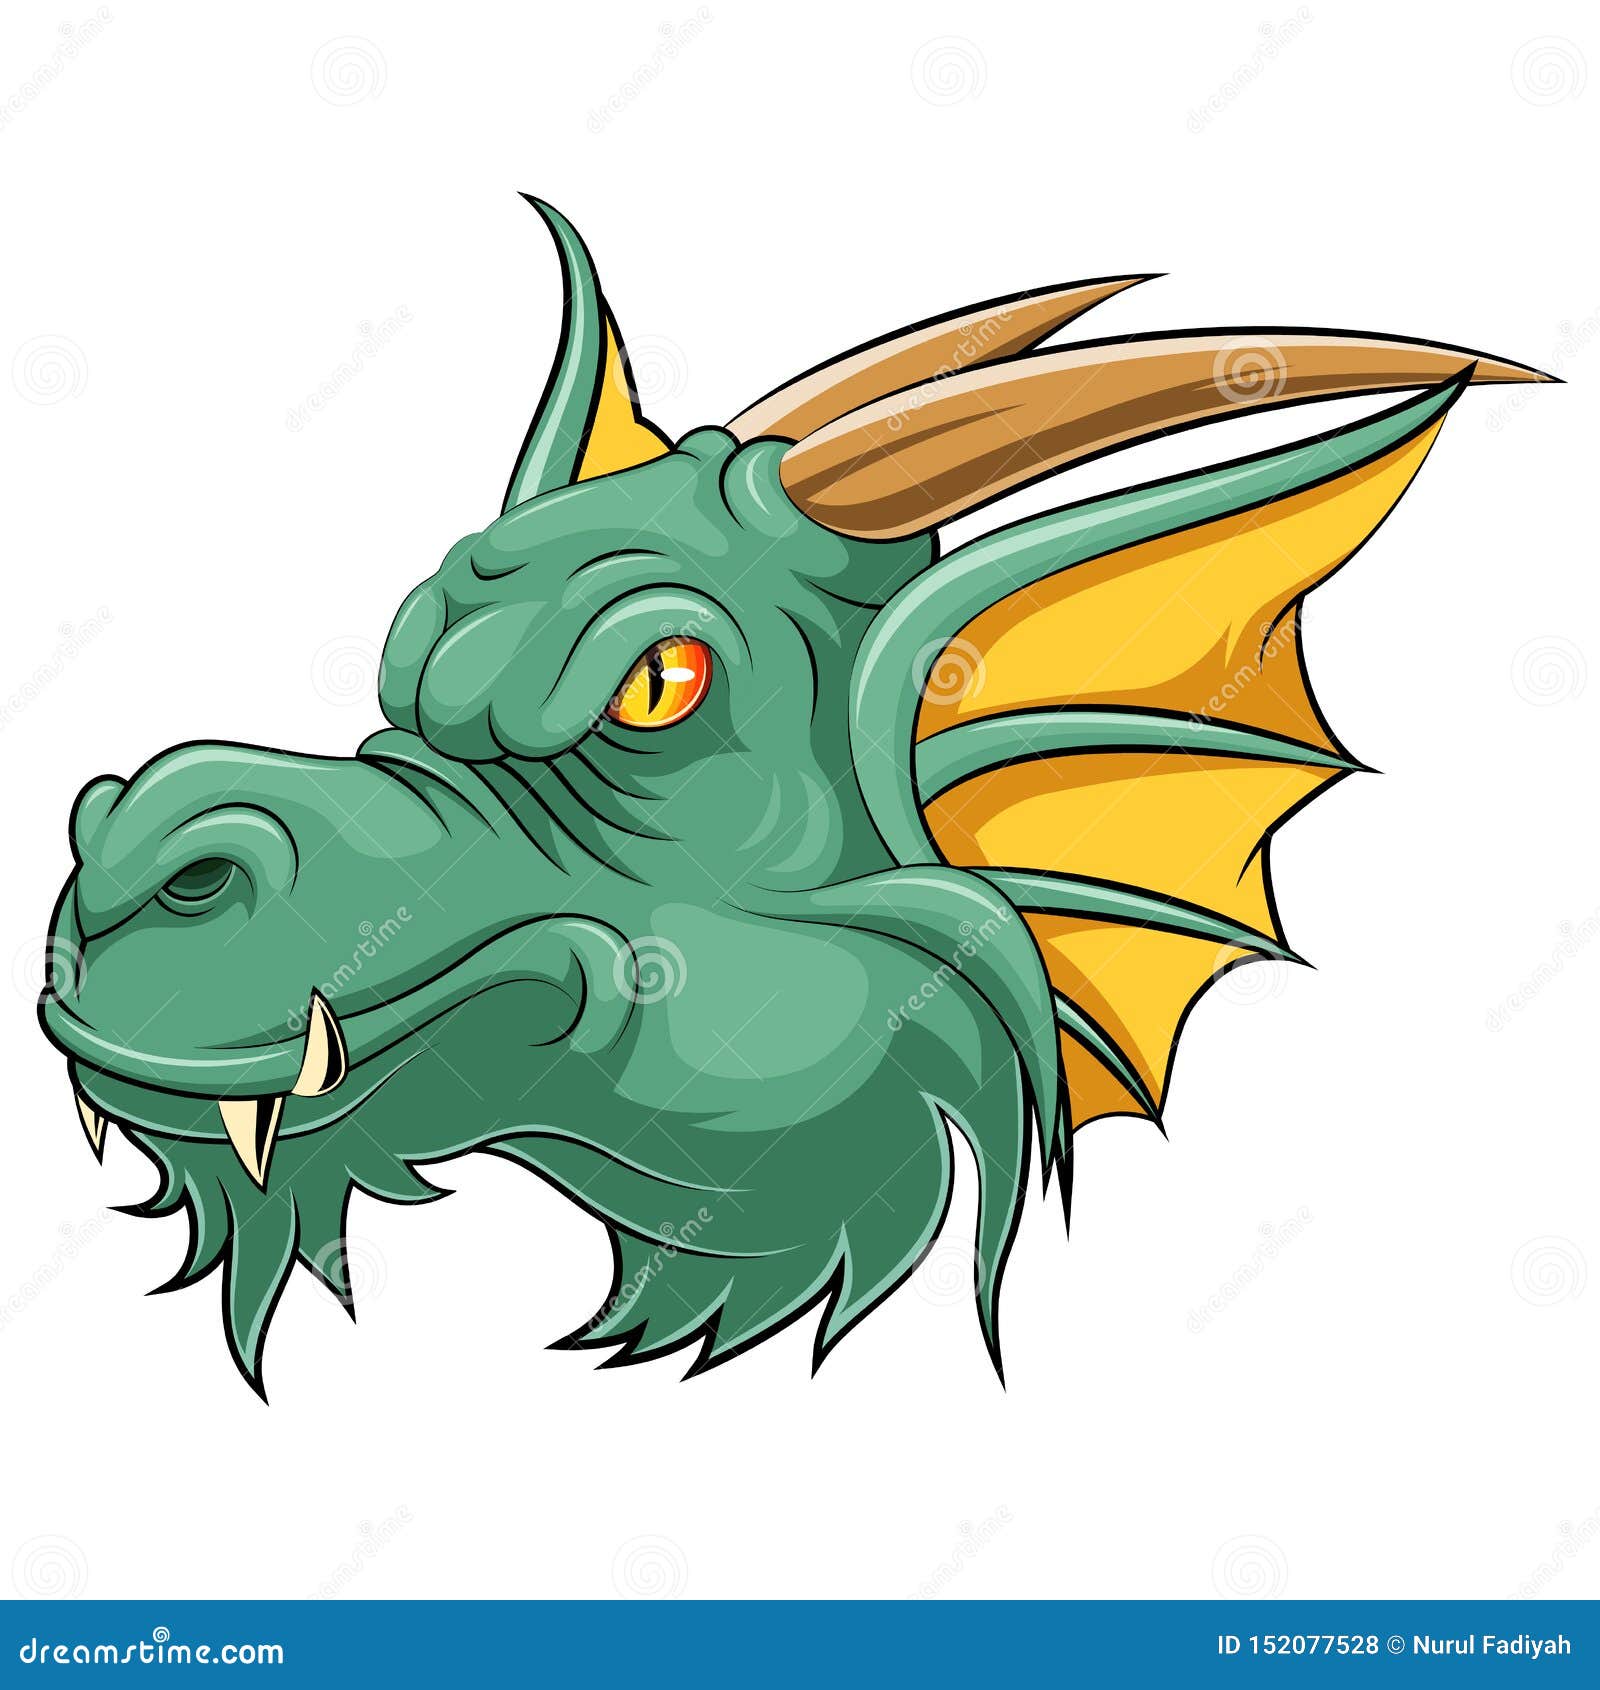 Mascot Head of an dragon stock vector. Illustration of head - 152077528